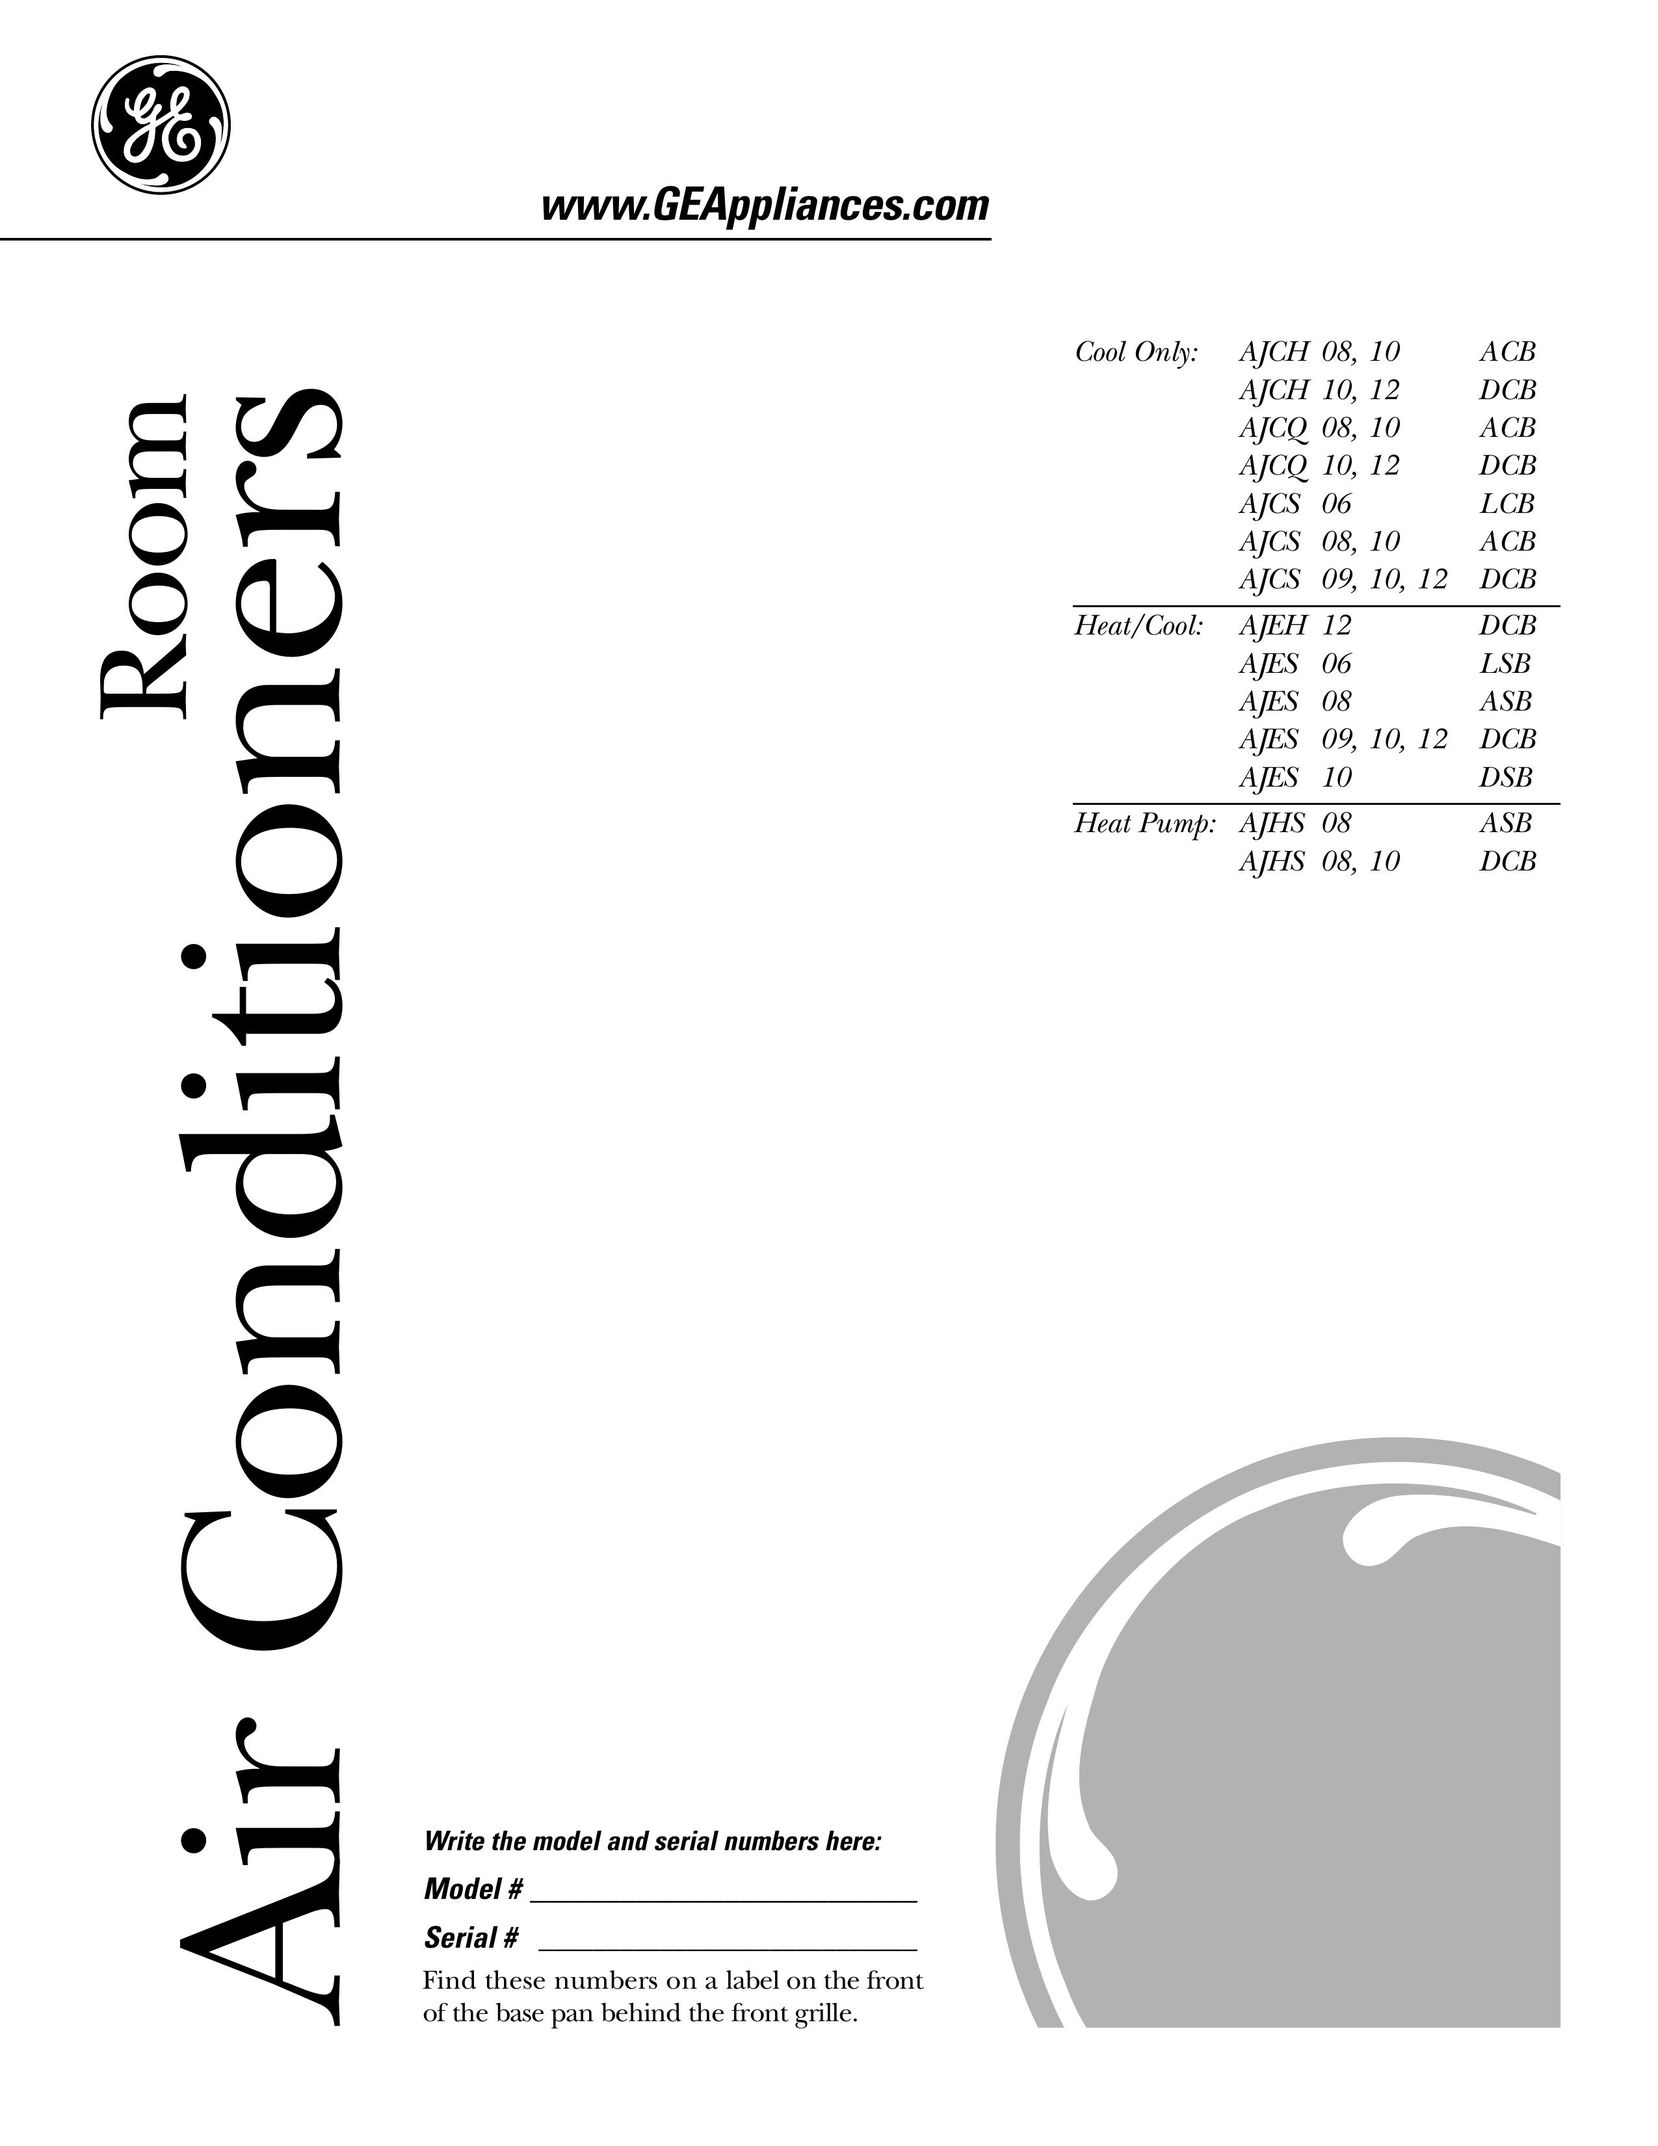 GE 10 DCB Air Conditioner User Manual